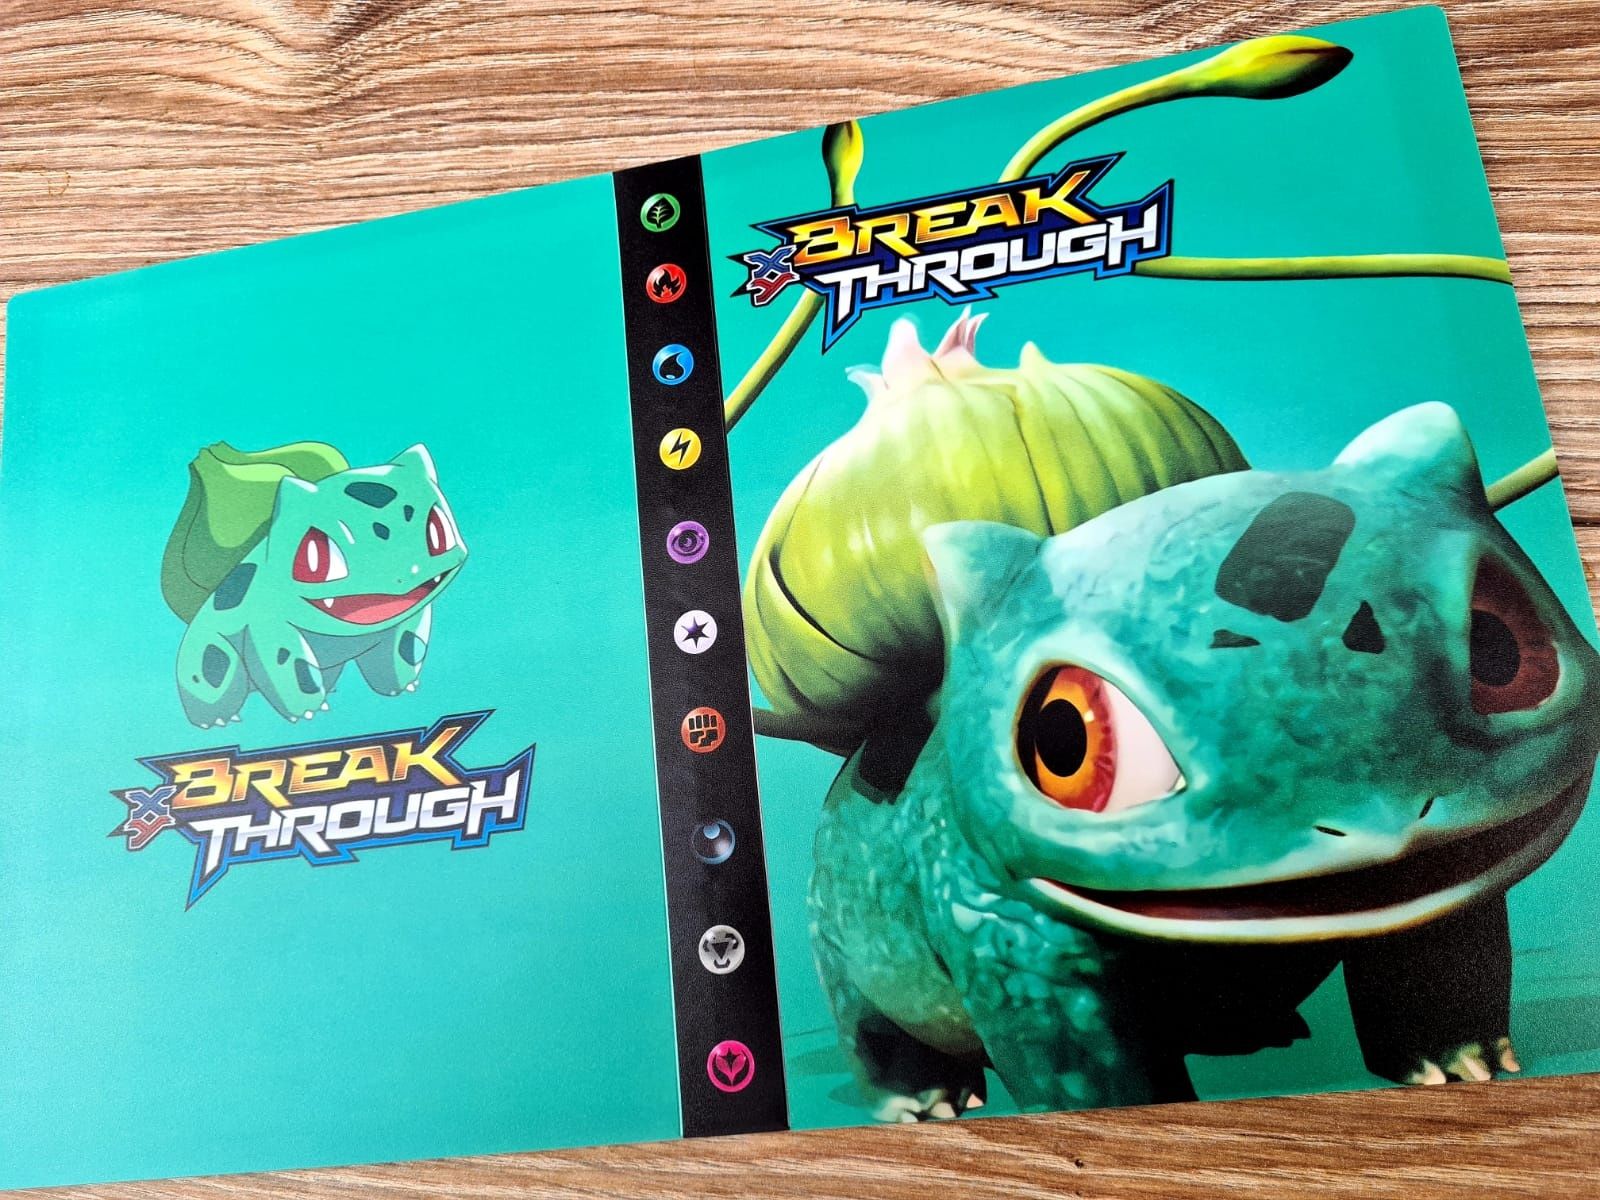 Nowy super album na karty Pokemon A5 - zabawki